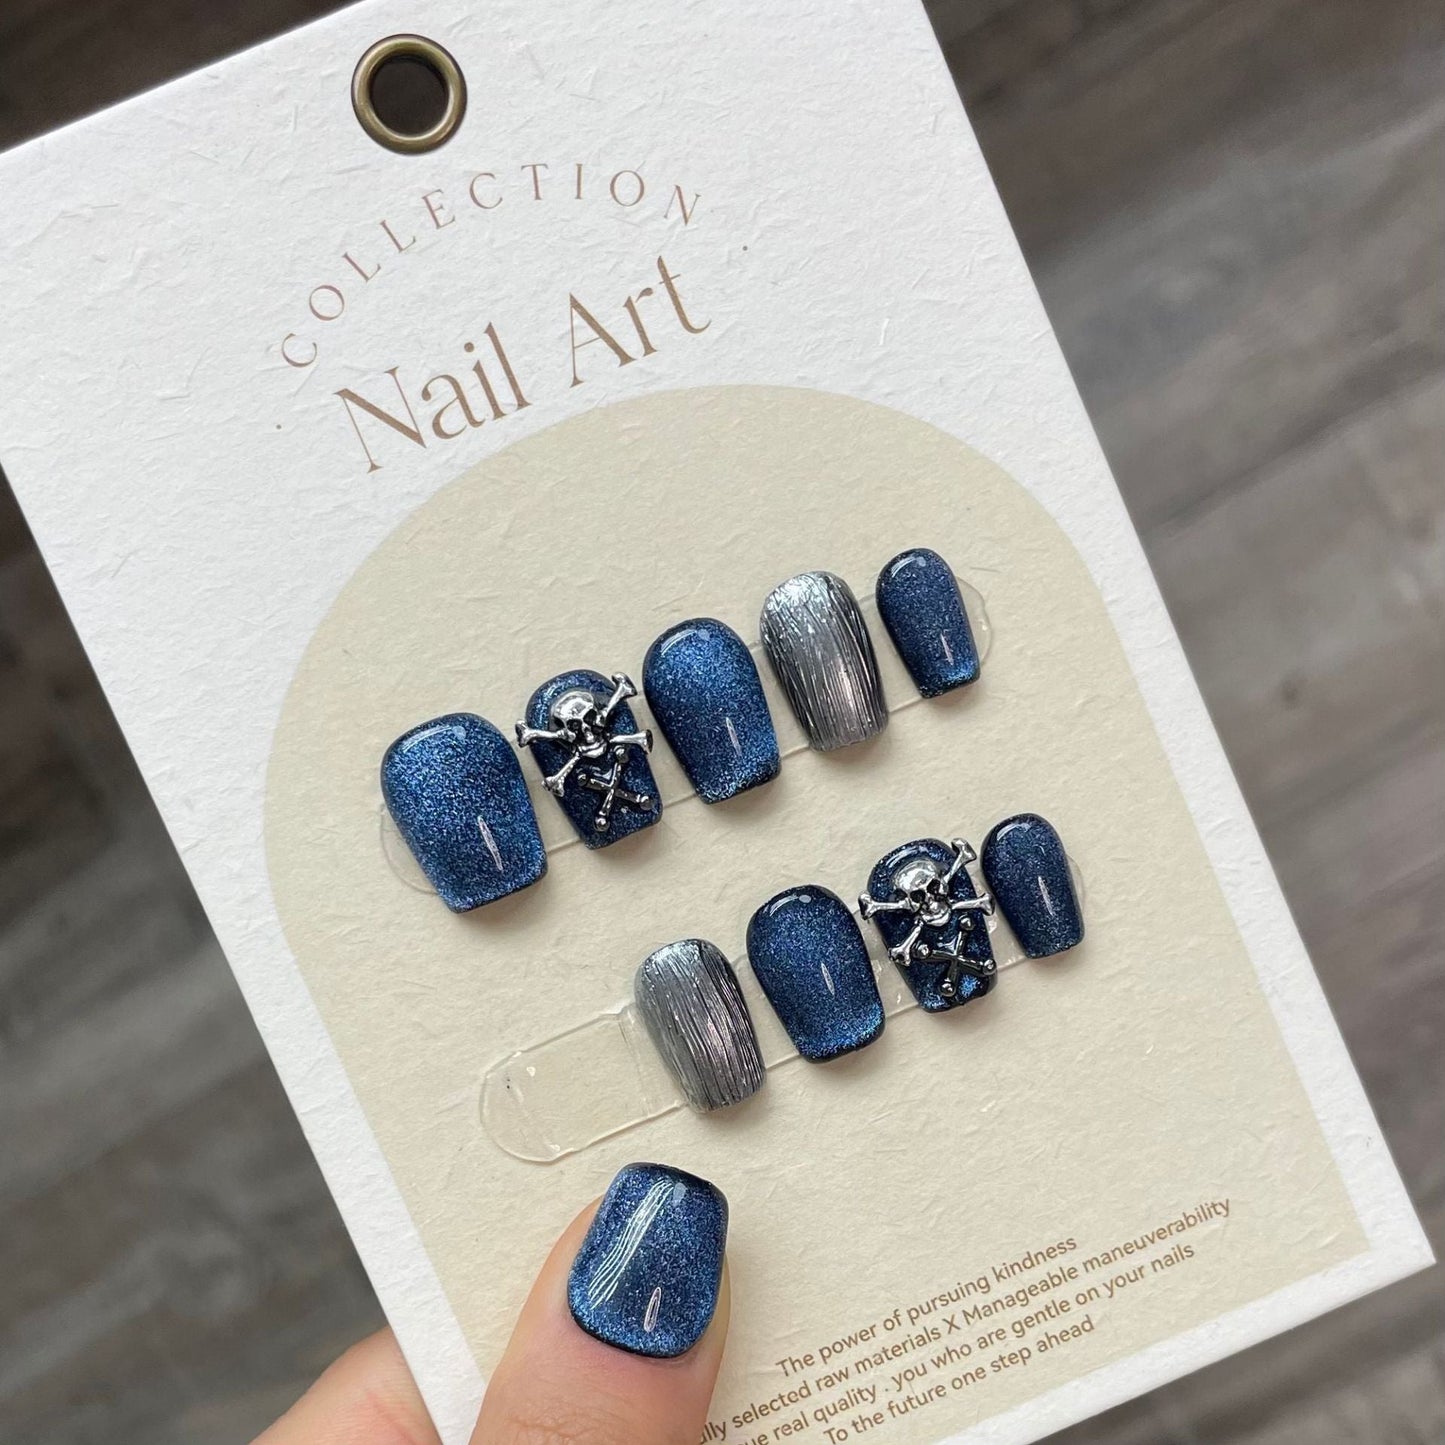 876/878 Pirate Cat's Eye style press on nails 100% handmade false nails blue